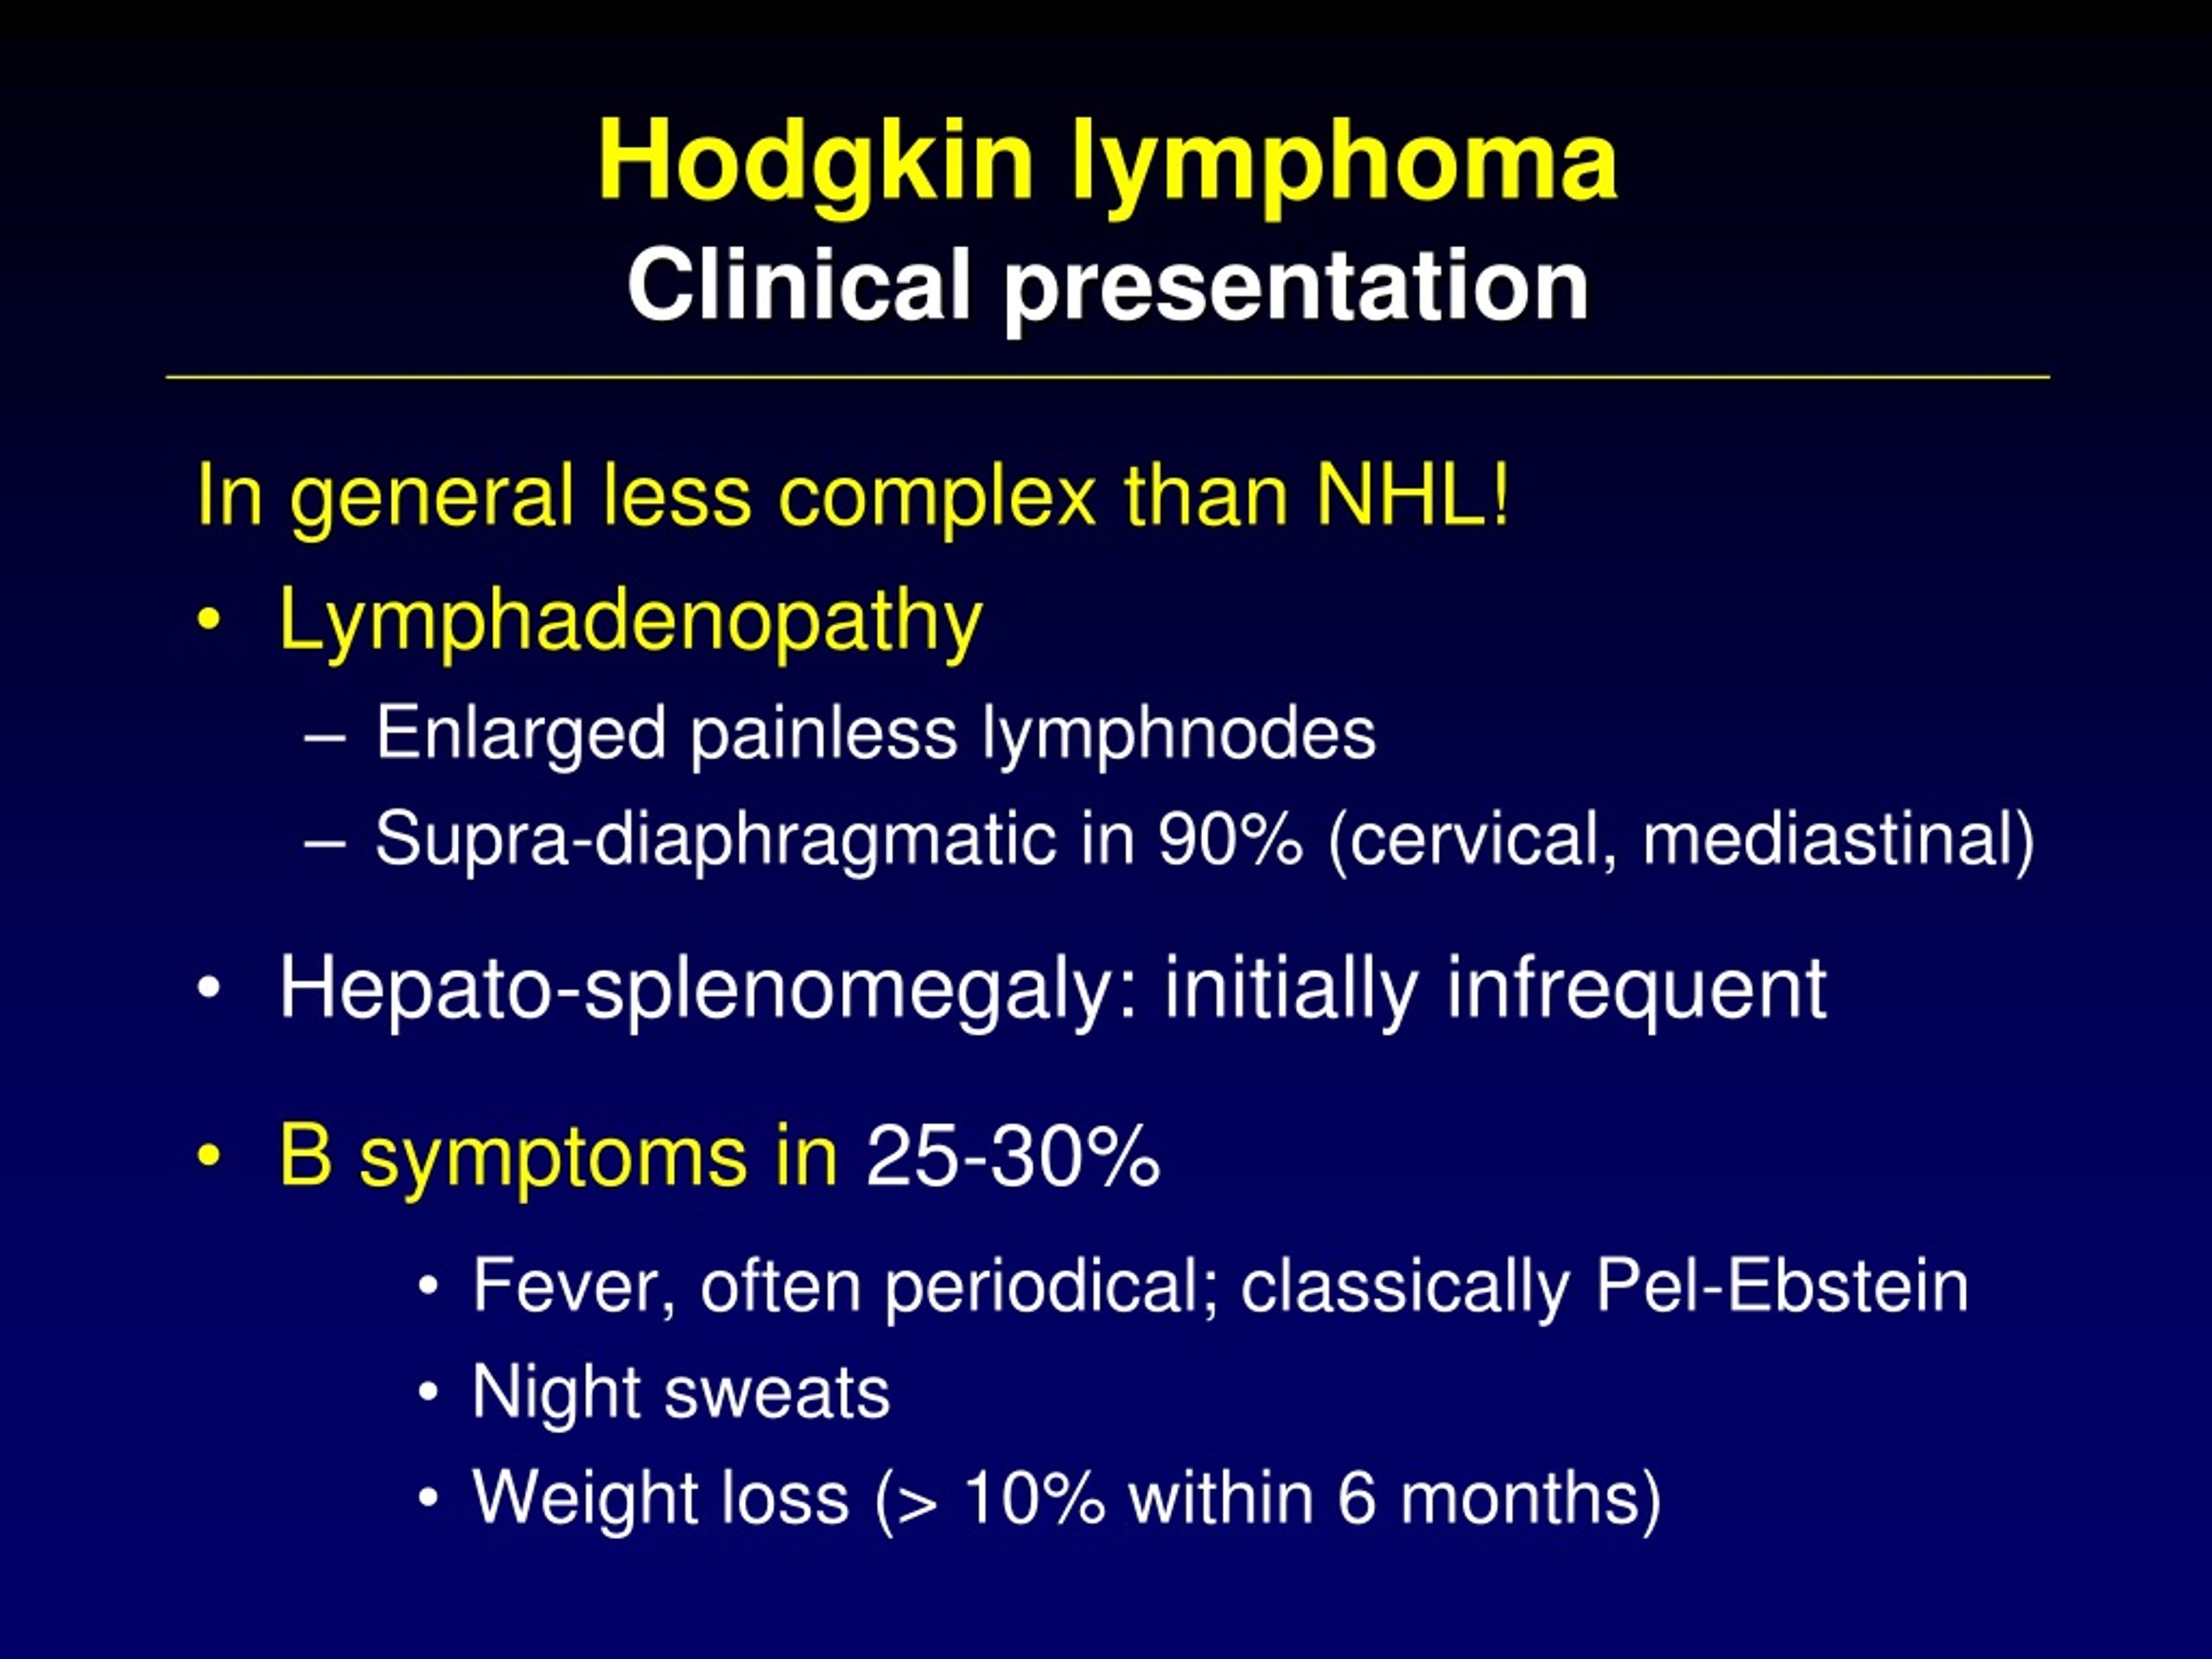 clinical presentation of hodgkin's lymphoma